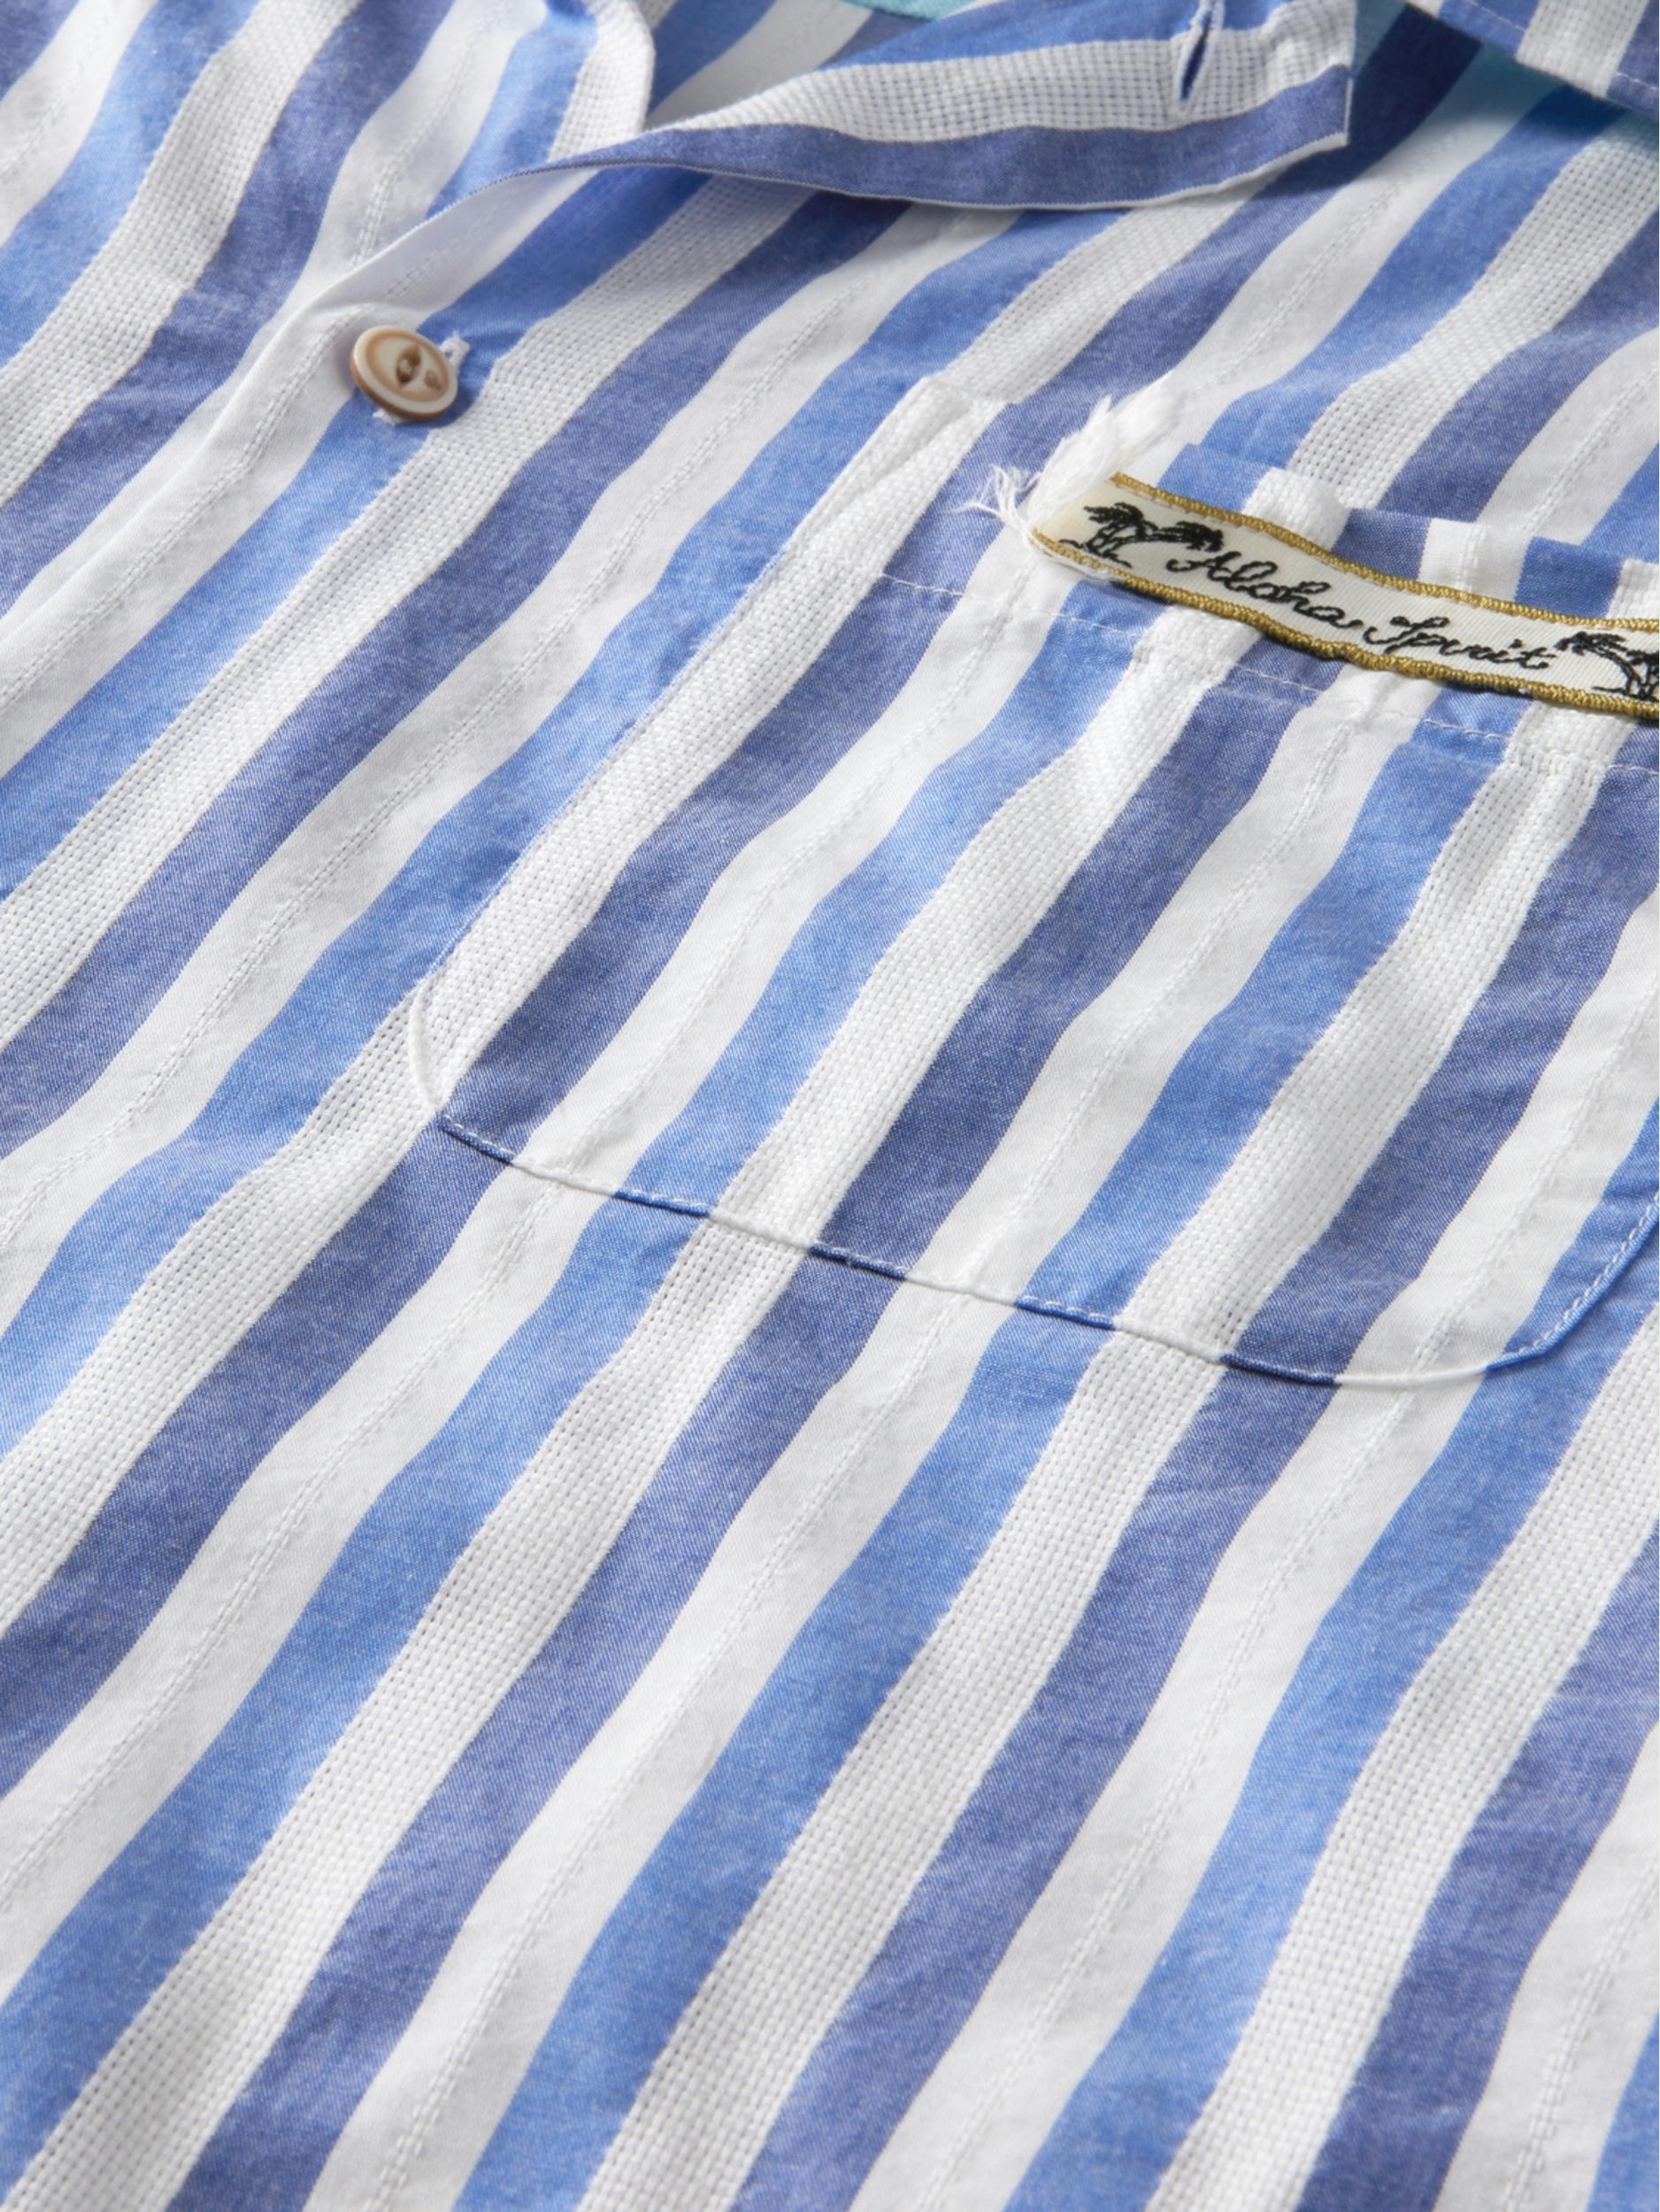 Scotch & Soda Casual hemd korte mouw Blauw Lightweight structured shortsl 166013/0219